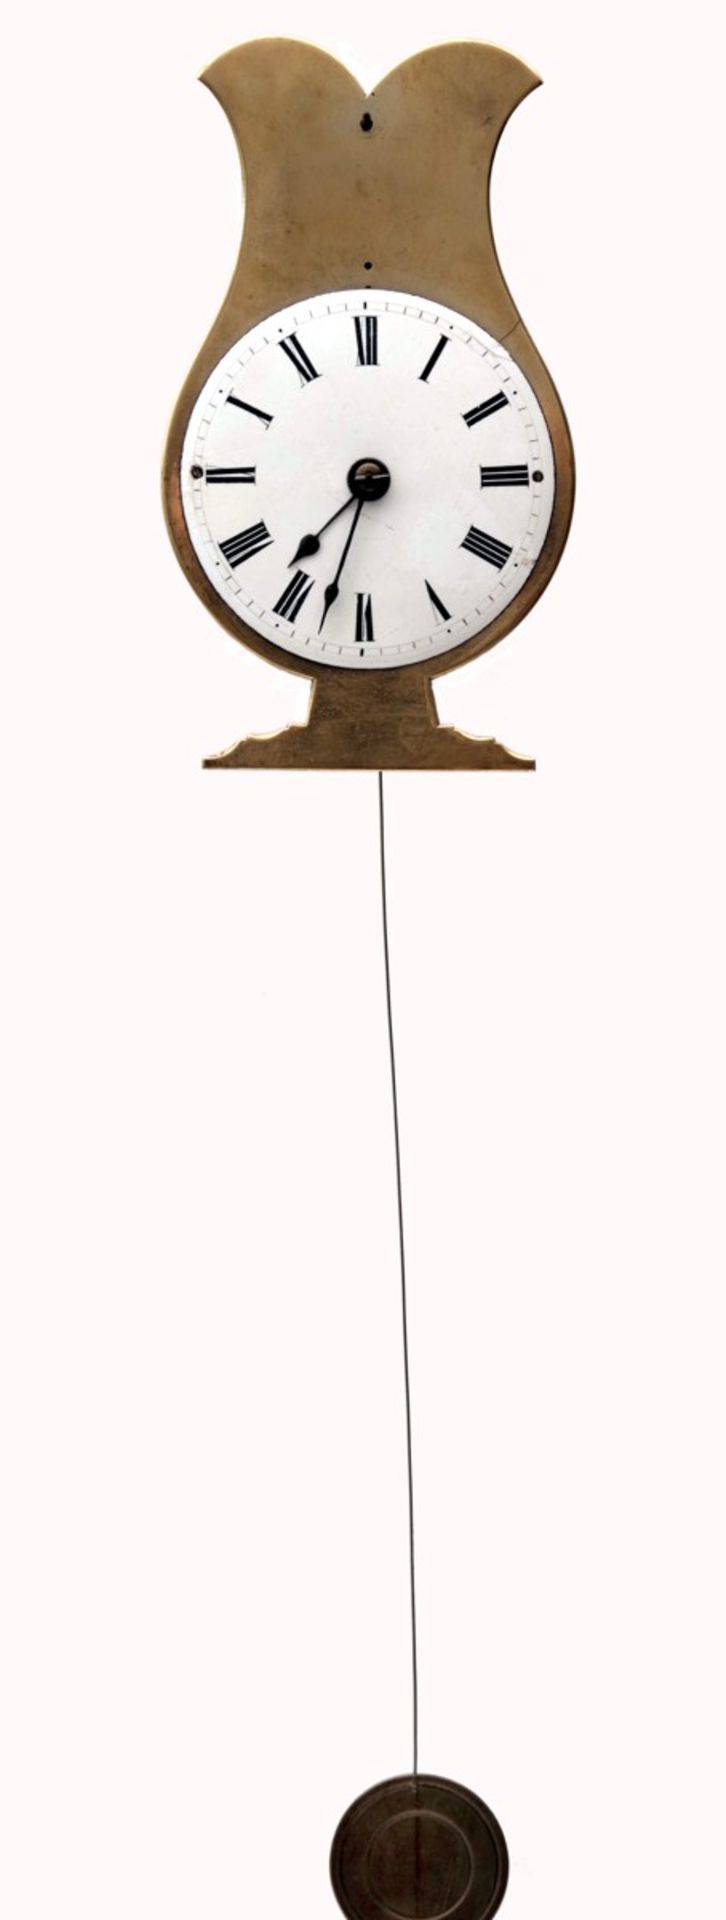 A Wall Clock (Brettluhr)